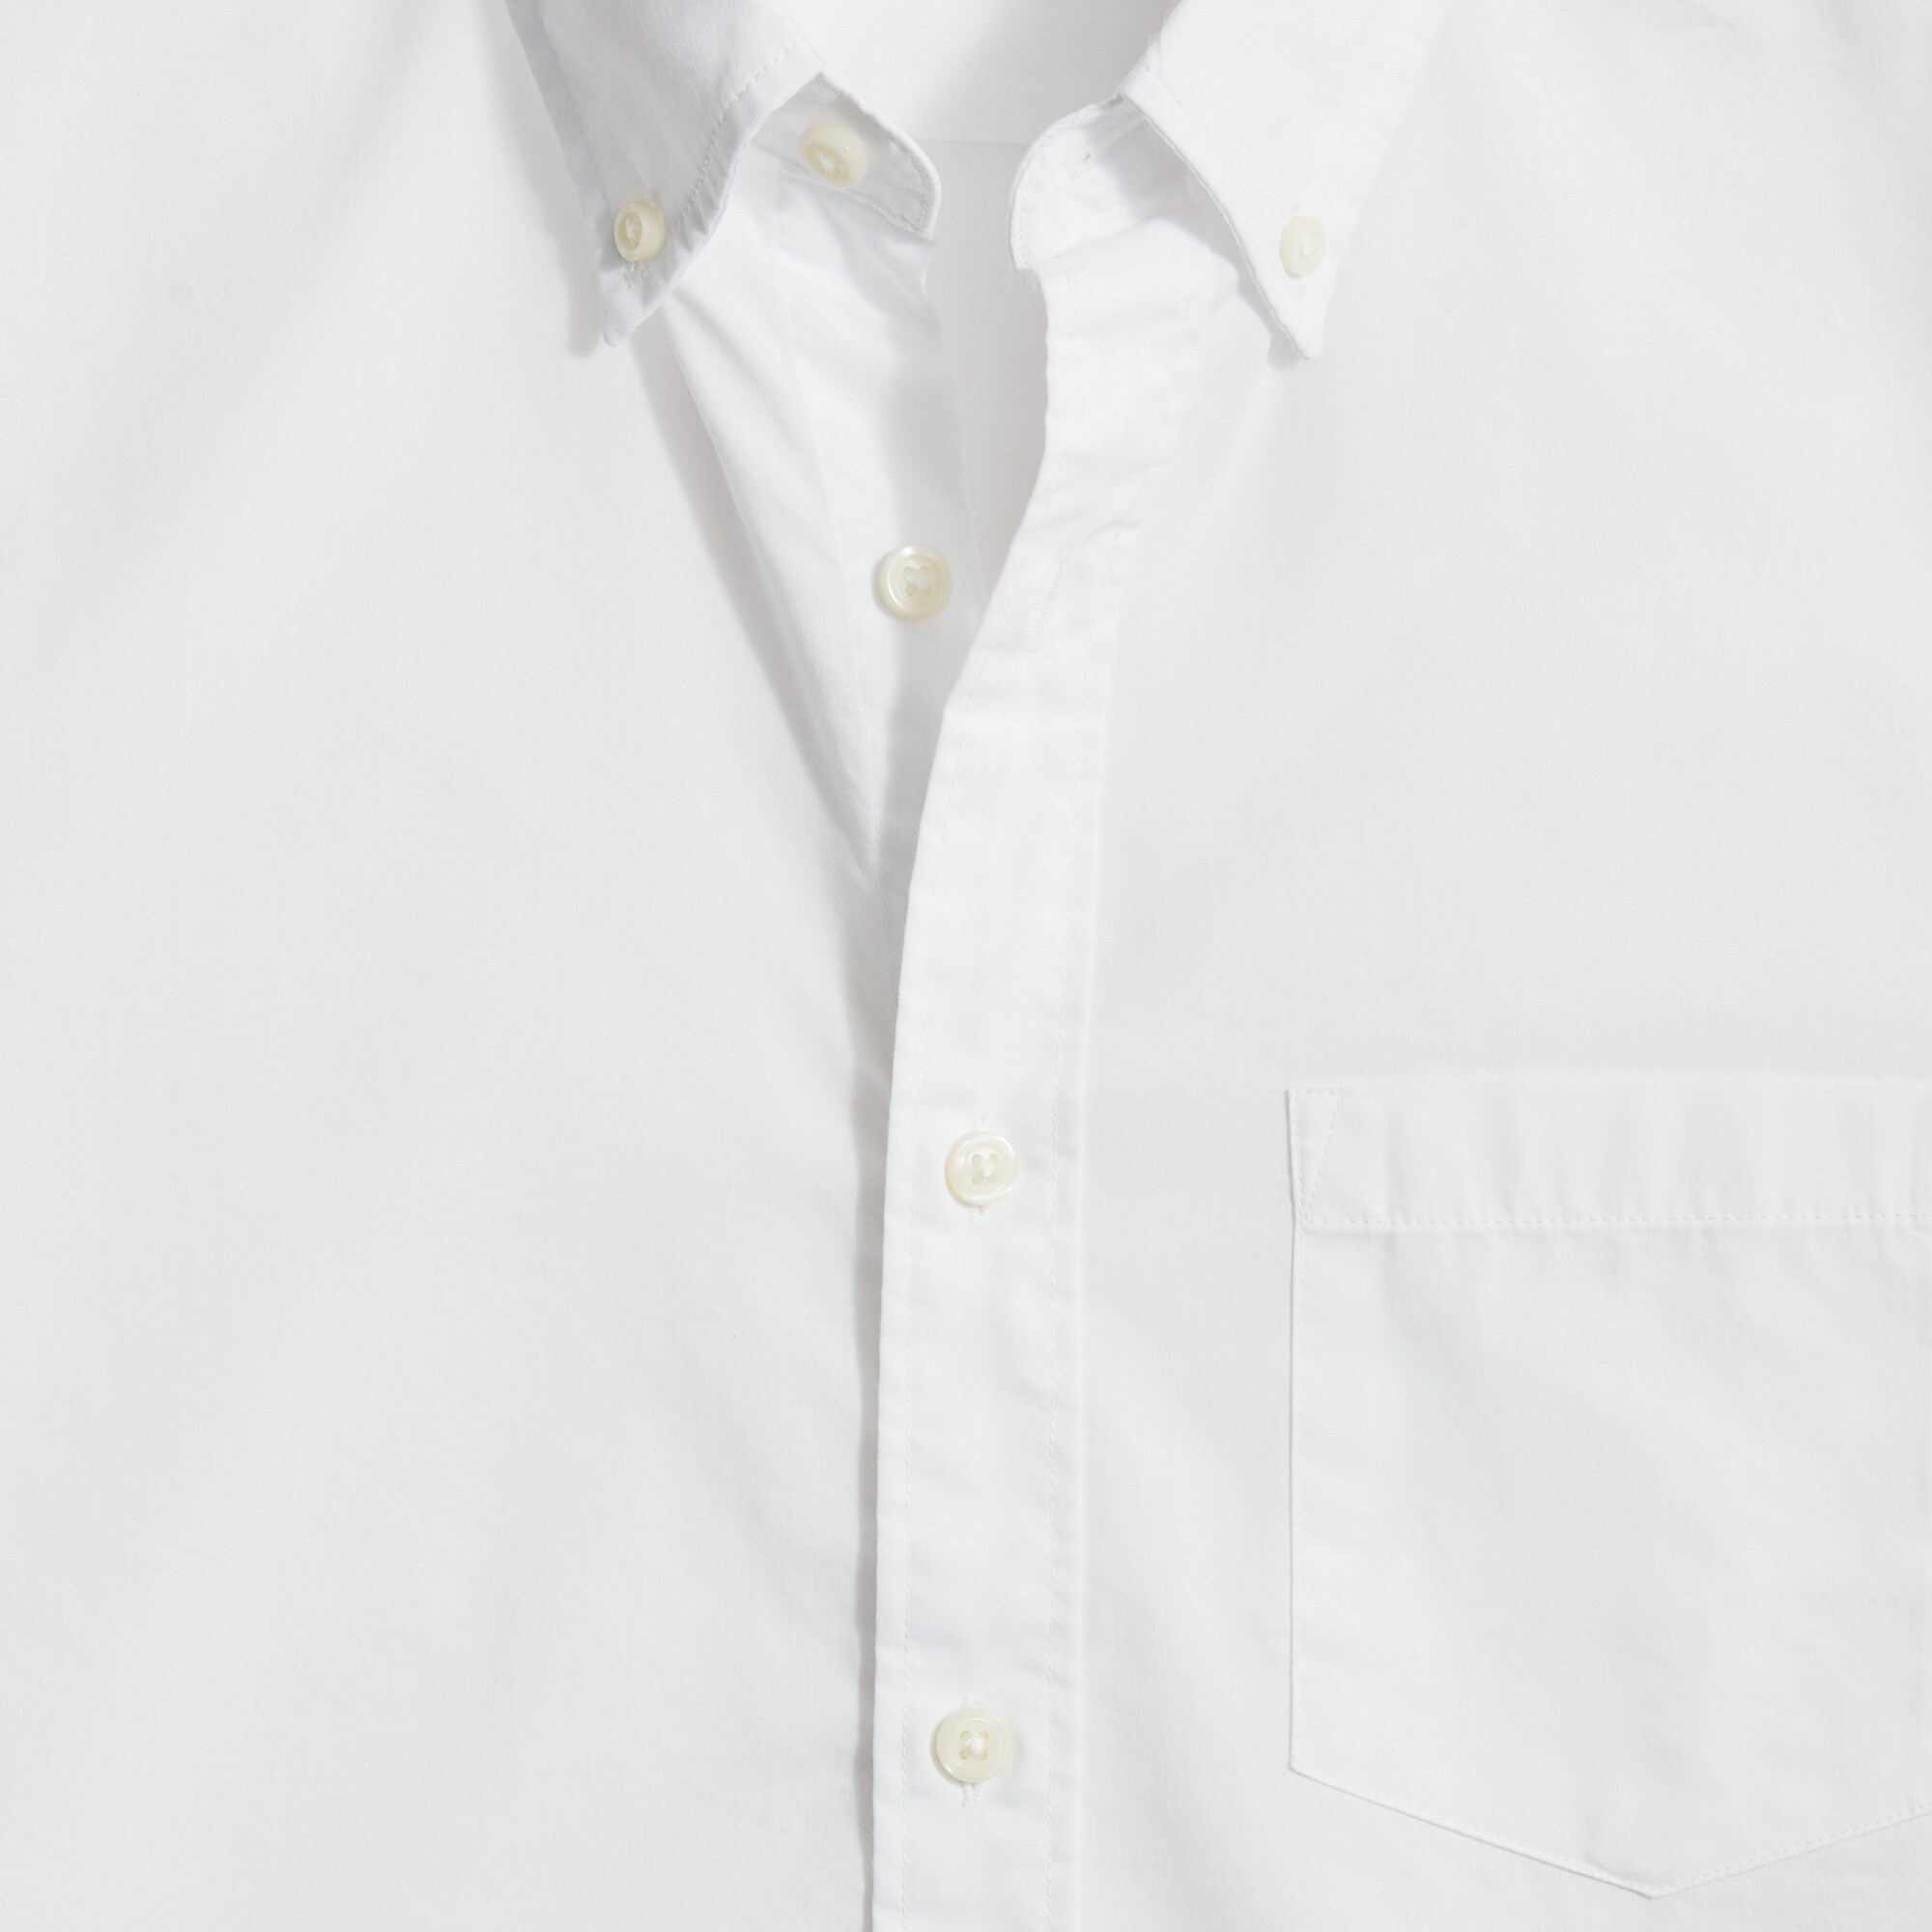 Factory: Slim Short-sleeve Flex Performance Shirt For Men